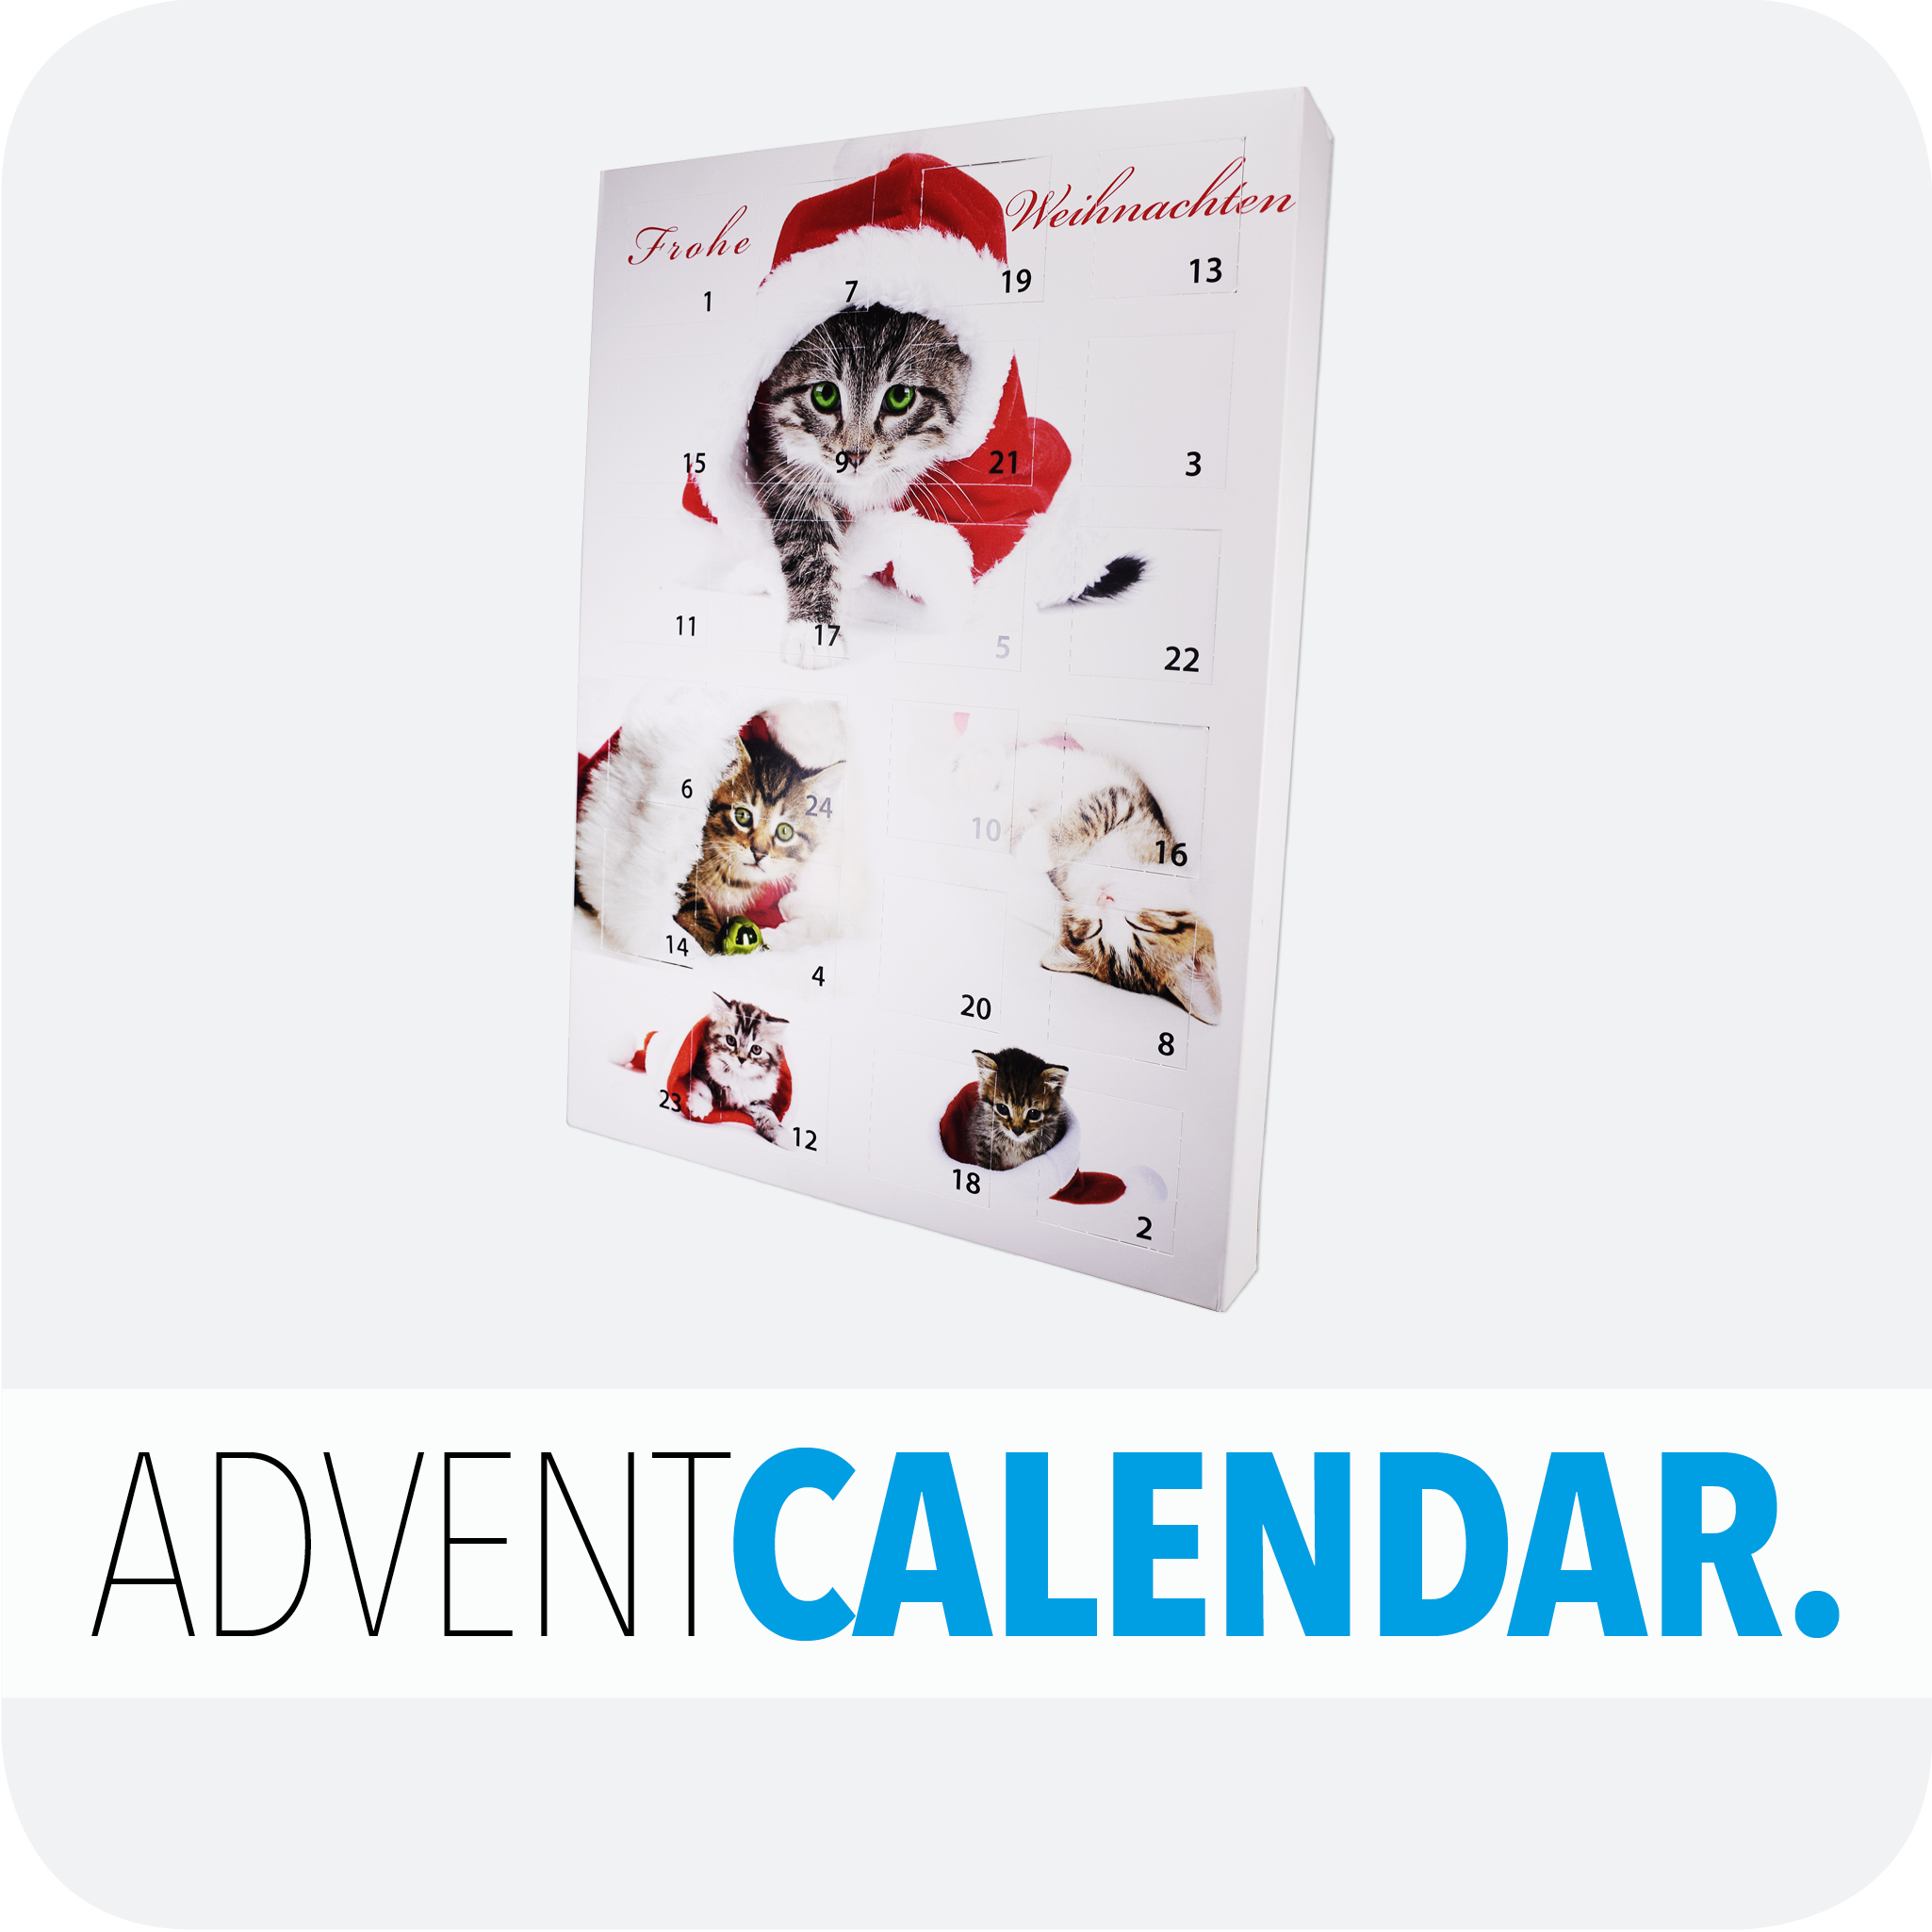 Advents calendar